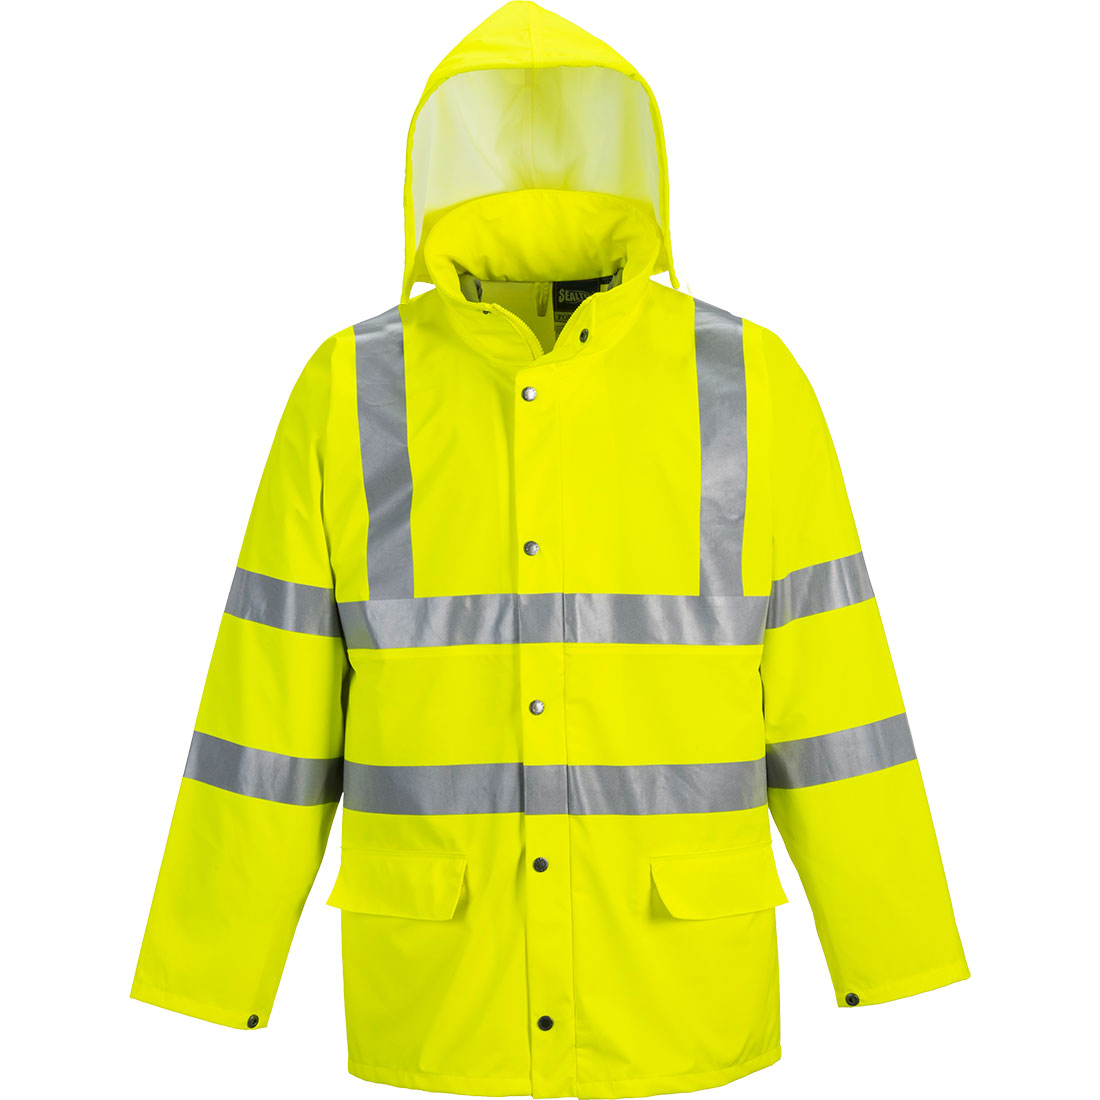 Sealtex Ultra Unlined Jacket (Yellow) Jackets S491